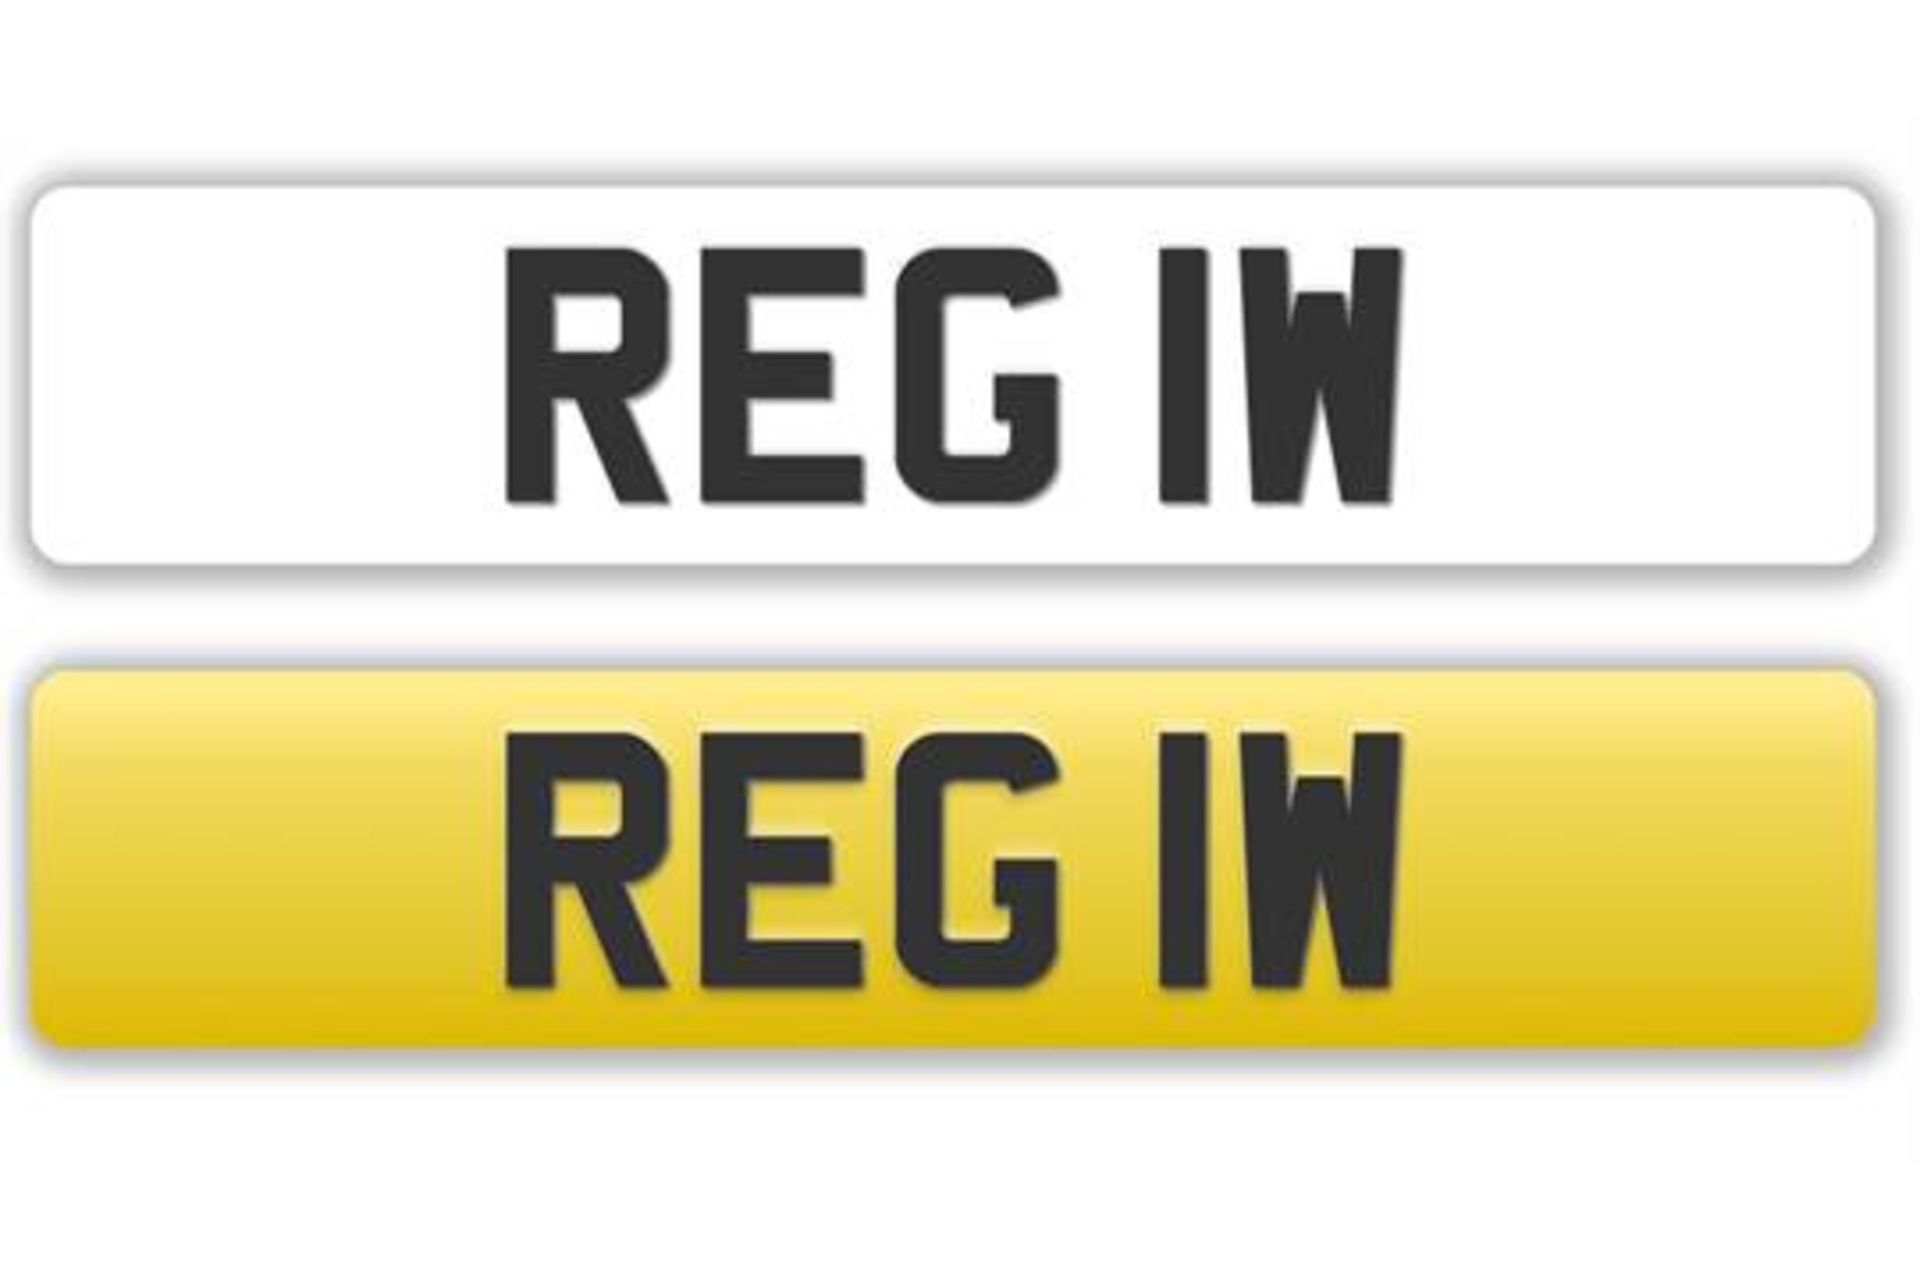 Cherished Vehicle Registration Plate... REG IW